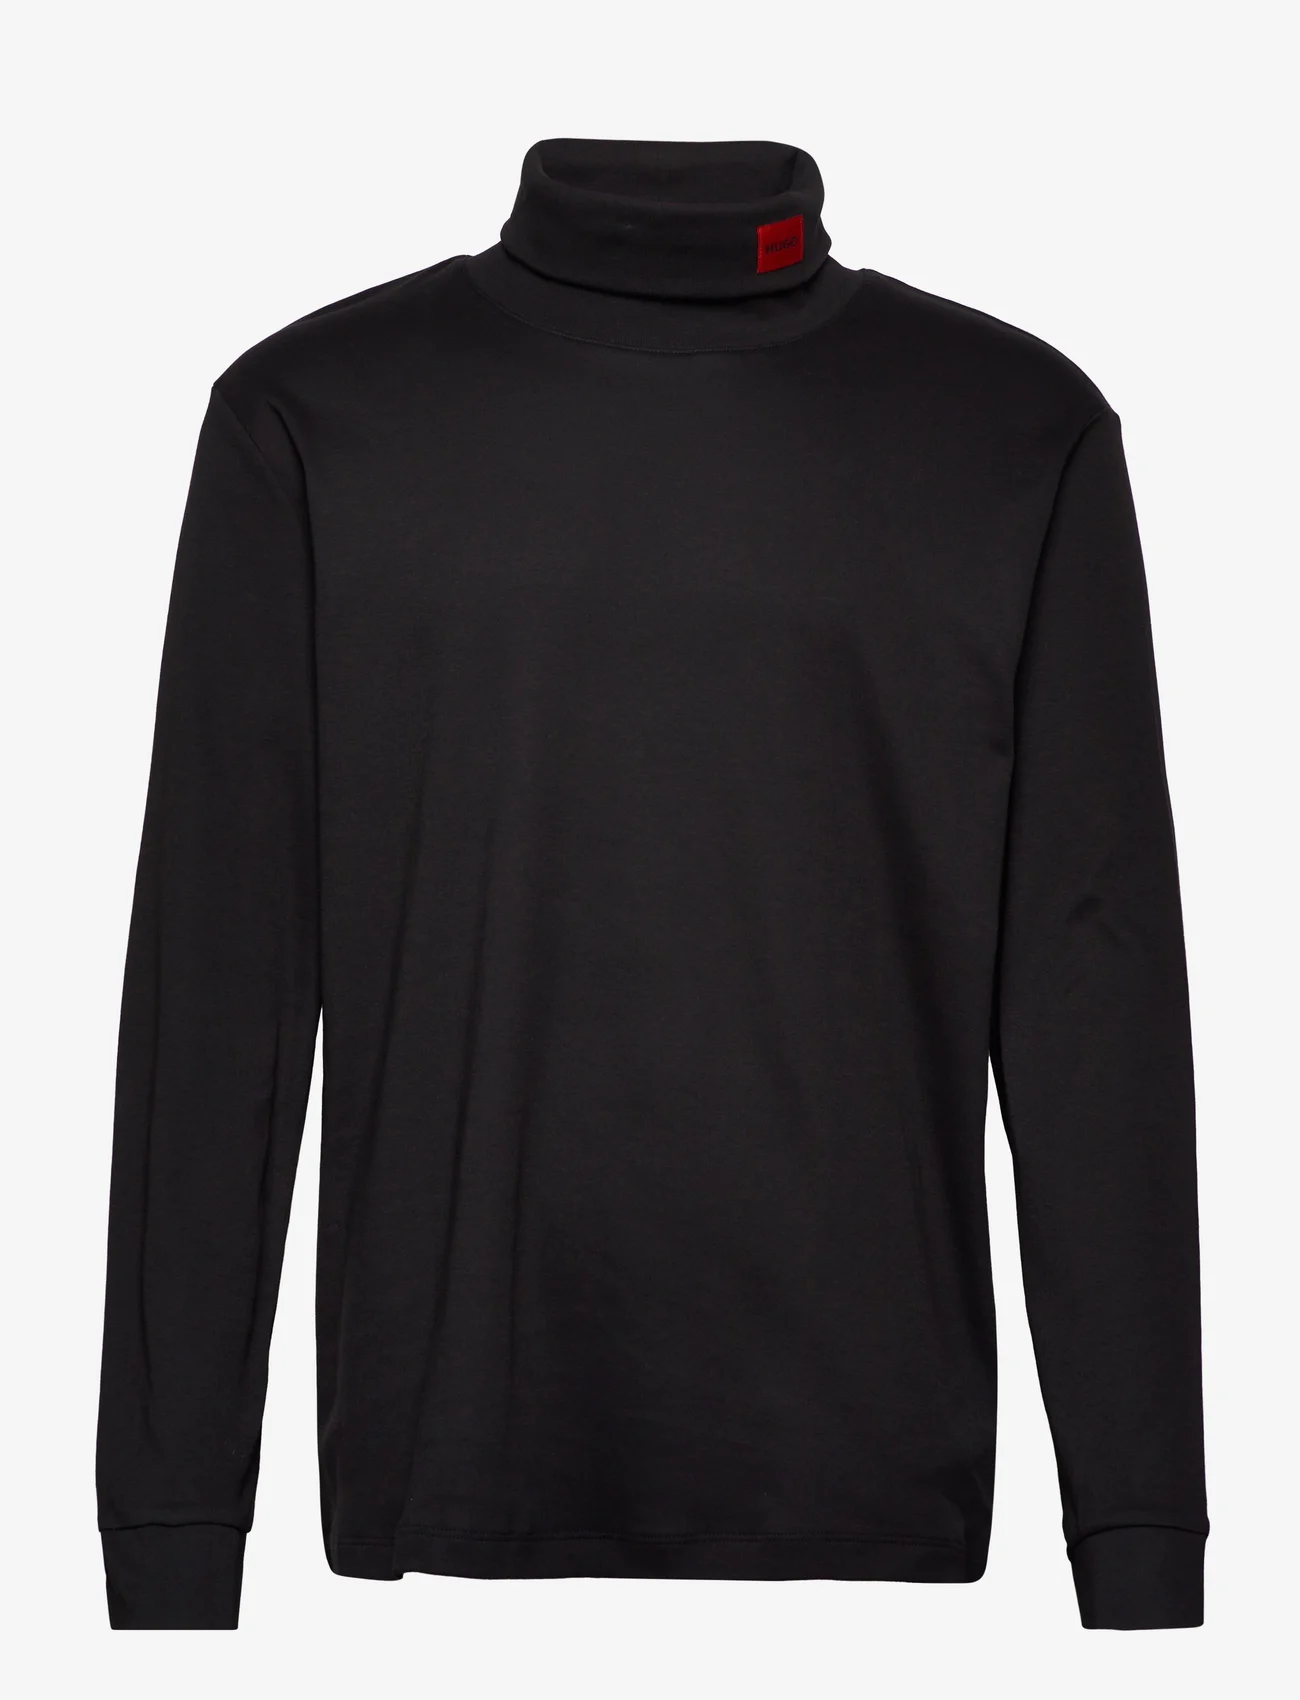 HUGO - Derollo224 - basic t-shirts - black - 0